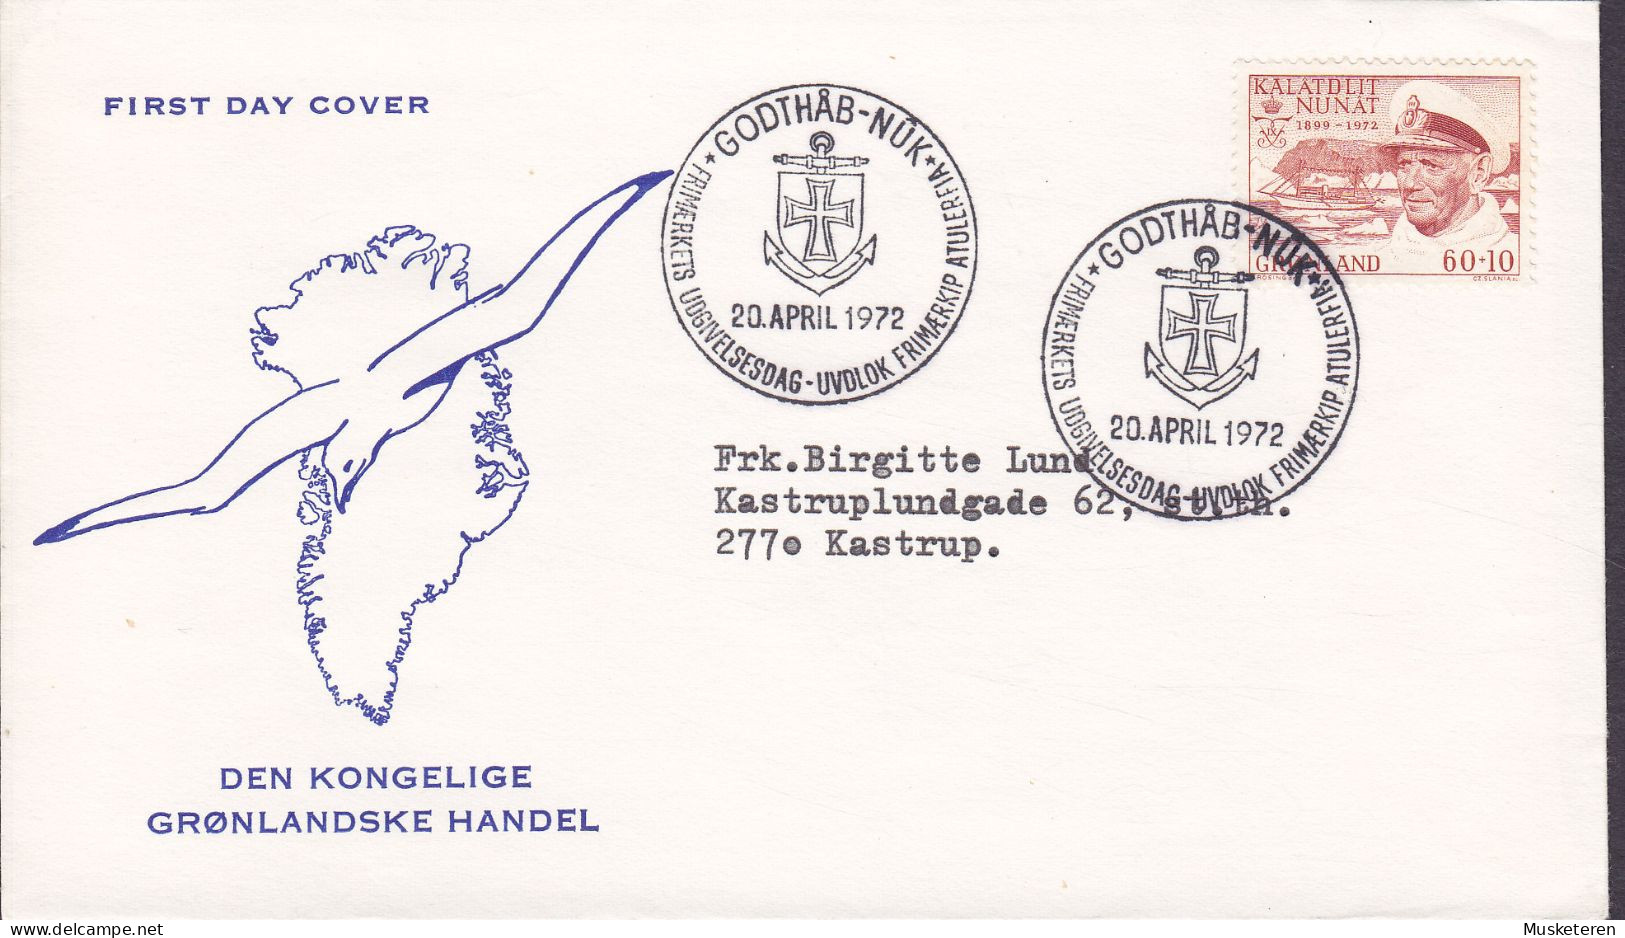 Greenland Ersttags Brief FDC Cover 1972 Tod Von König Frederik IX. (Cz. Slania) - FDC